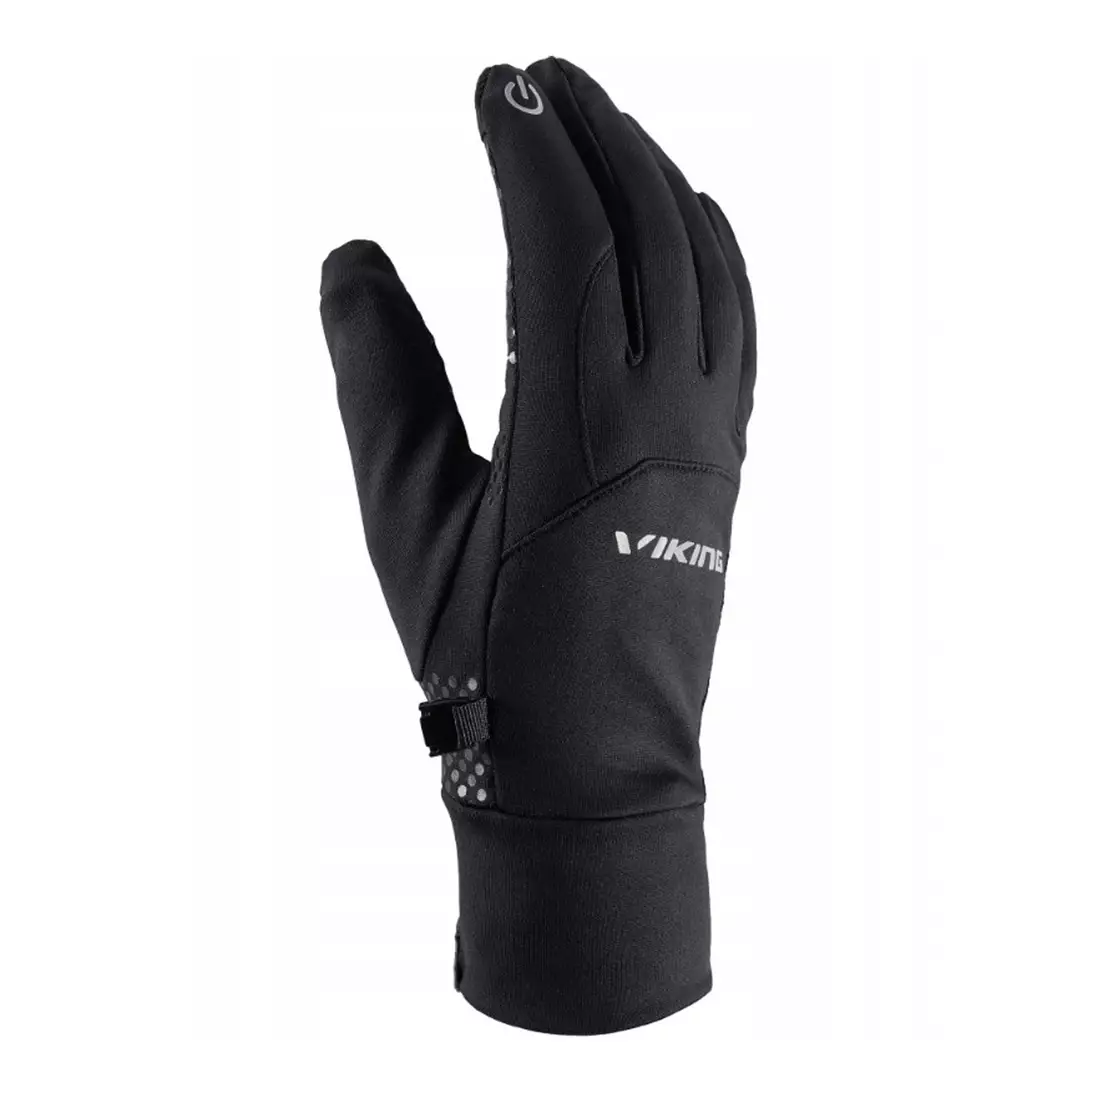 VIKING cycling gloves HORTEN 140/15/7732/09 black